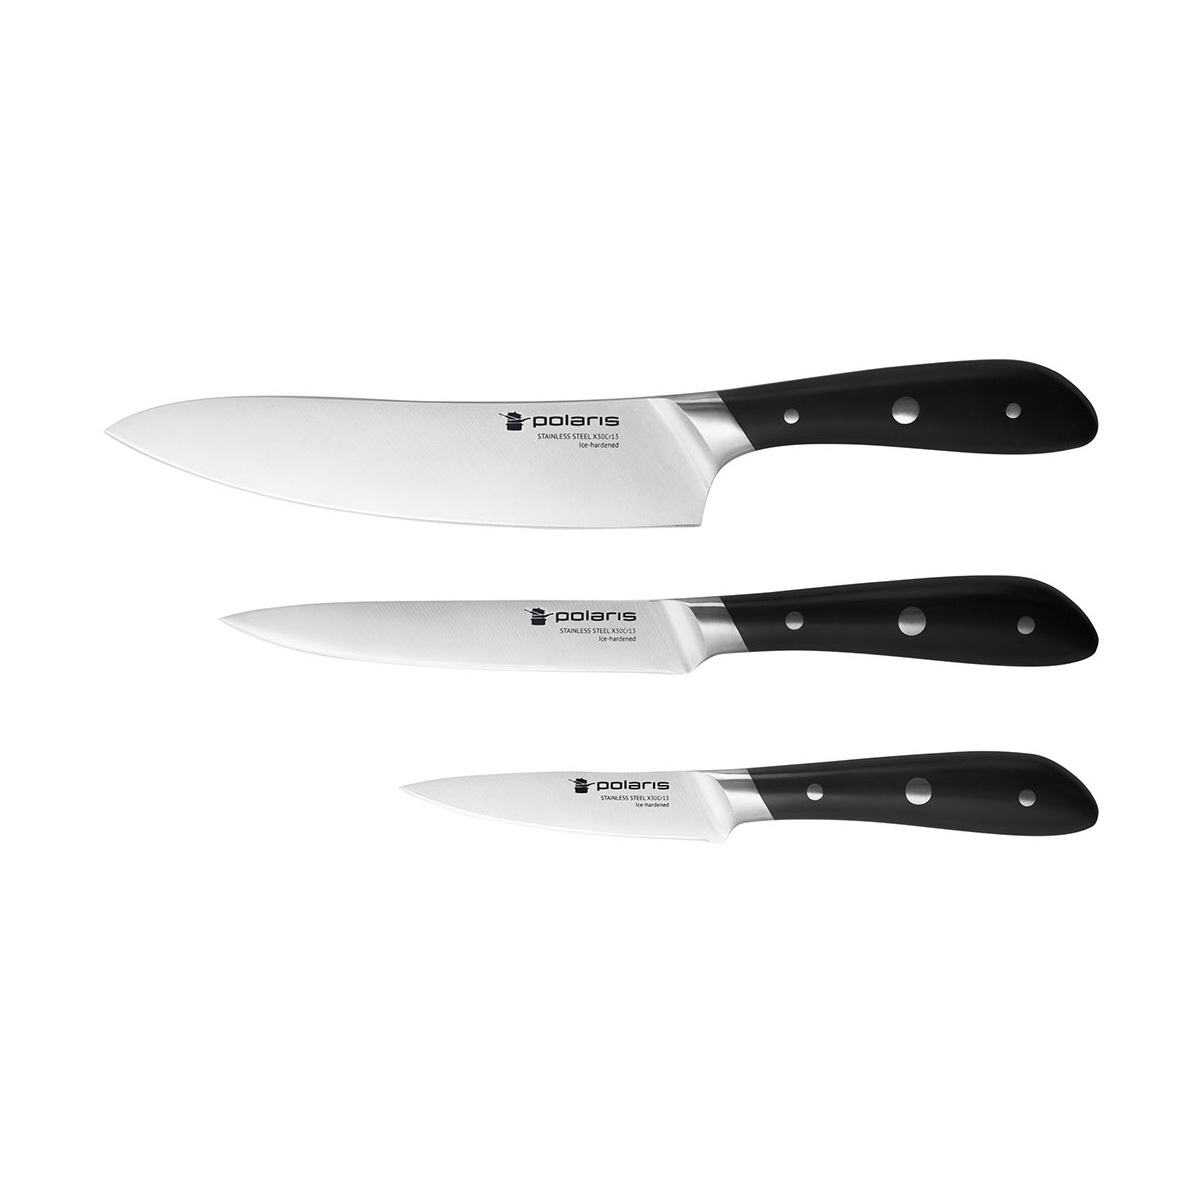 Ножи поларис купить. Набор ножей Поларис. Ножи Поларис 3ss. Нож Polaris ESC-5c универсал. Ножи Polaris Solid.